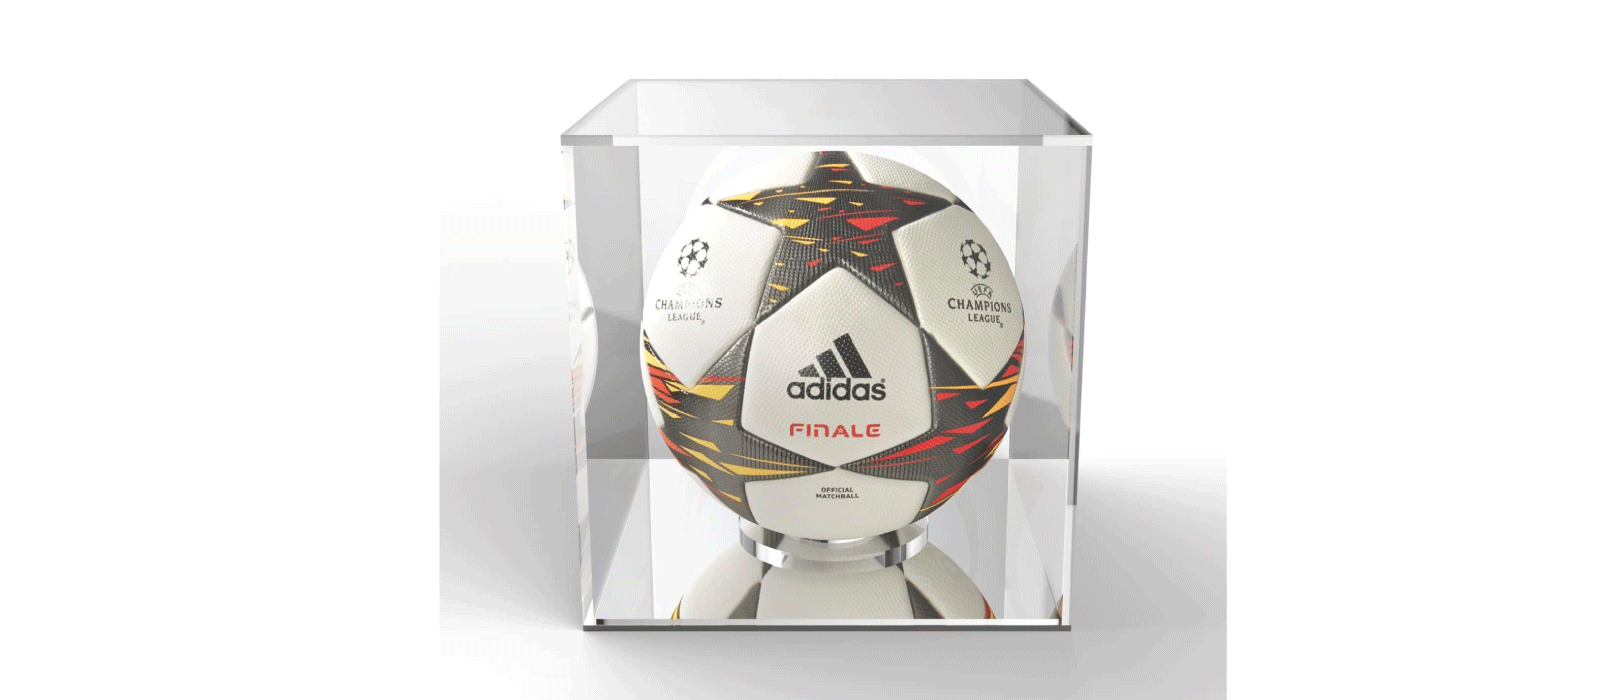 acrylic football display cube